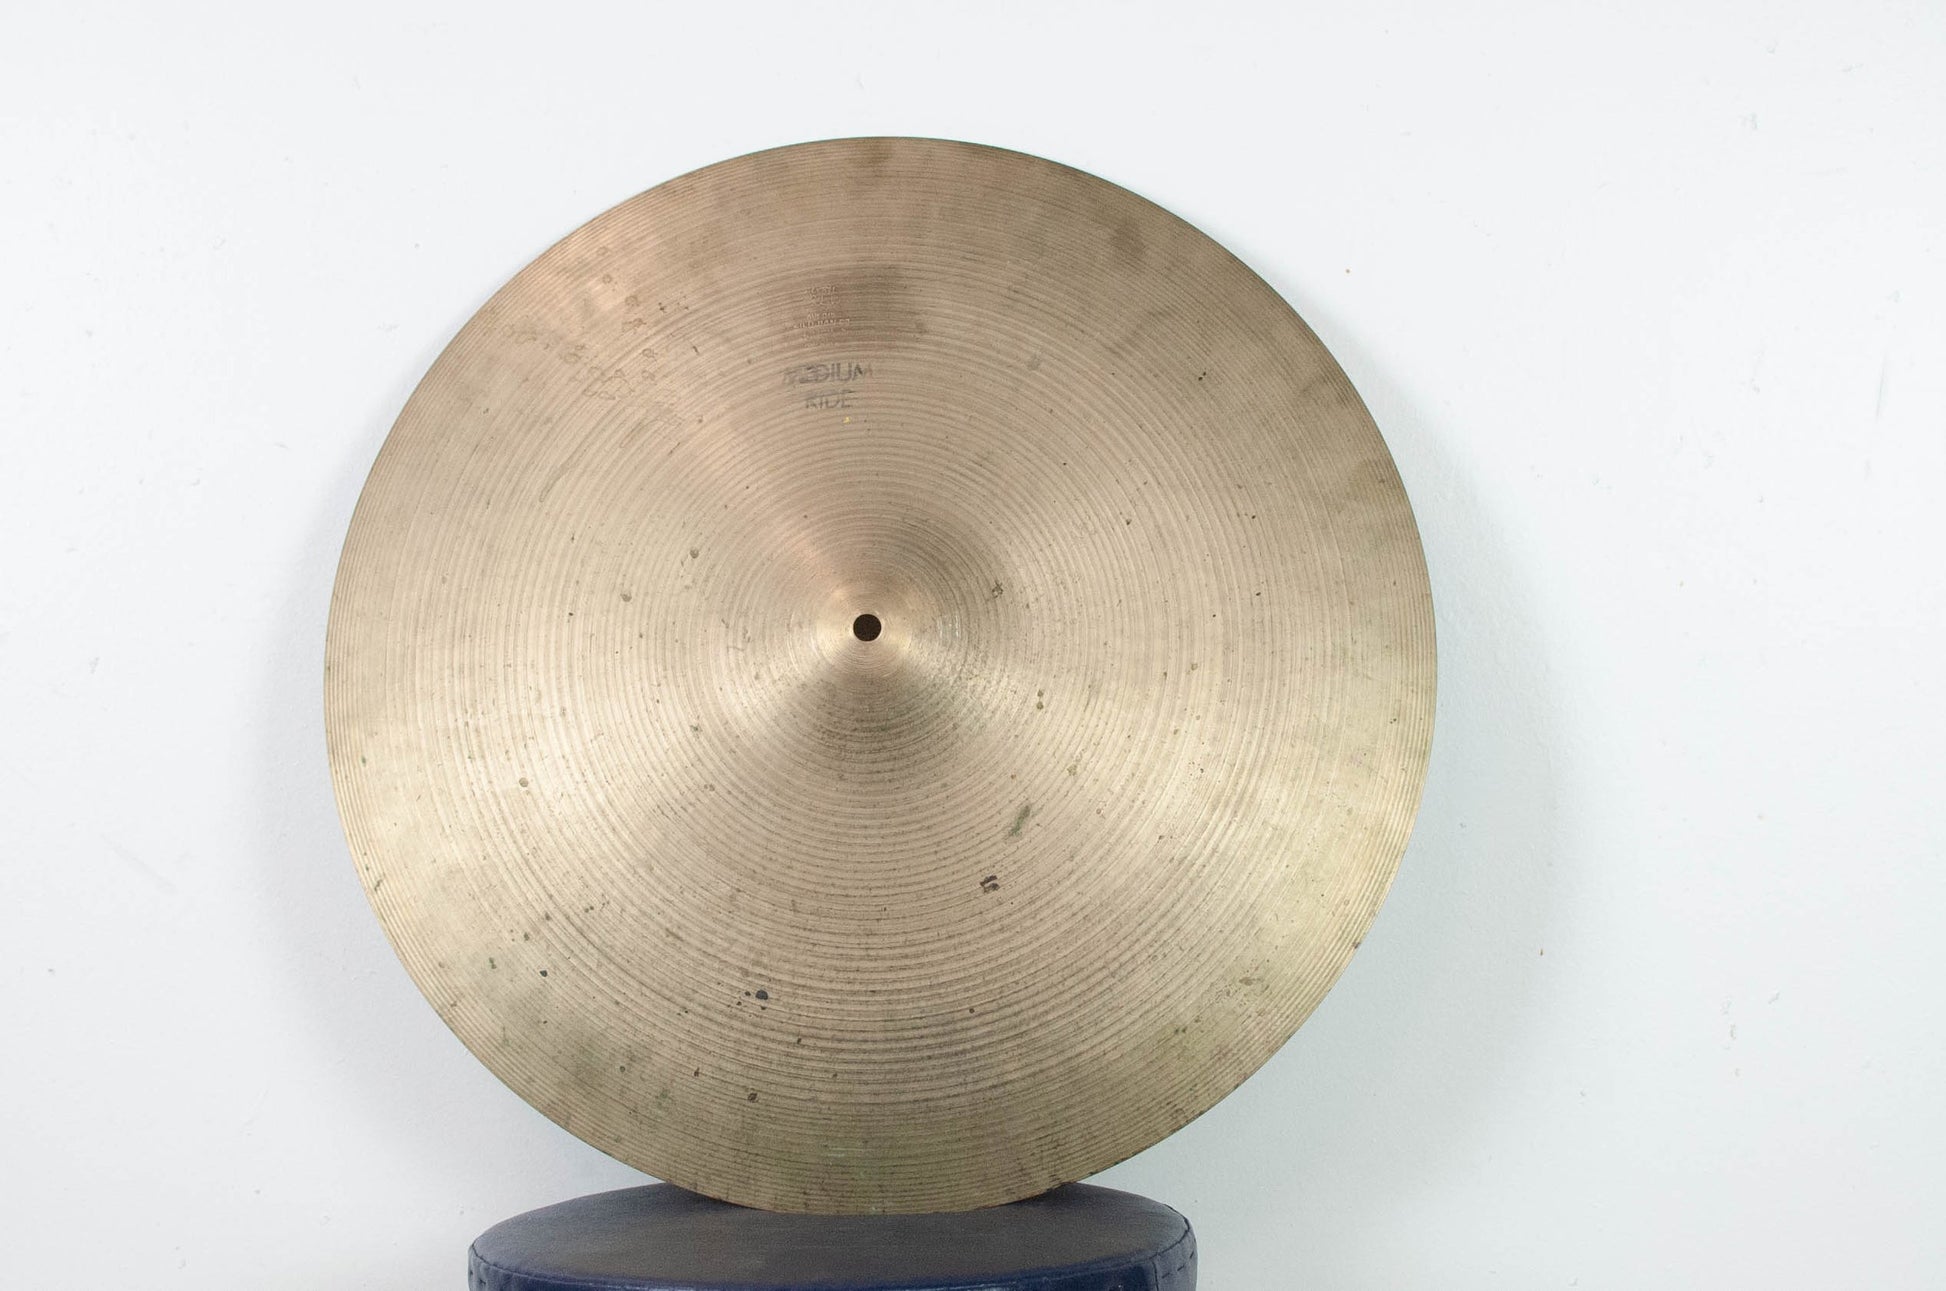 1960s Zildjian A 20" Medium Ride Cymbal 2360g